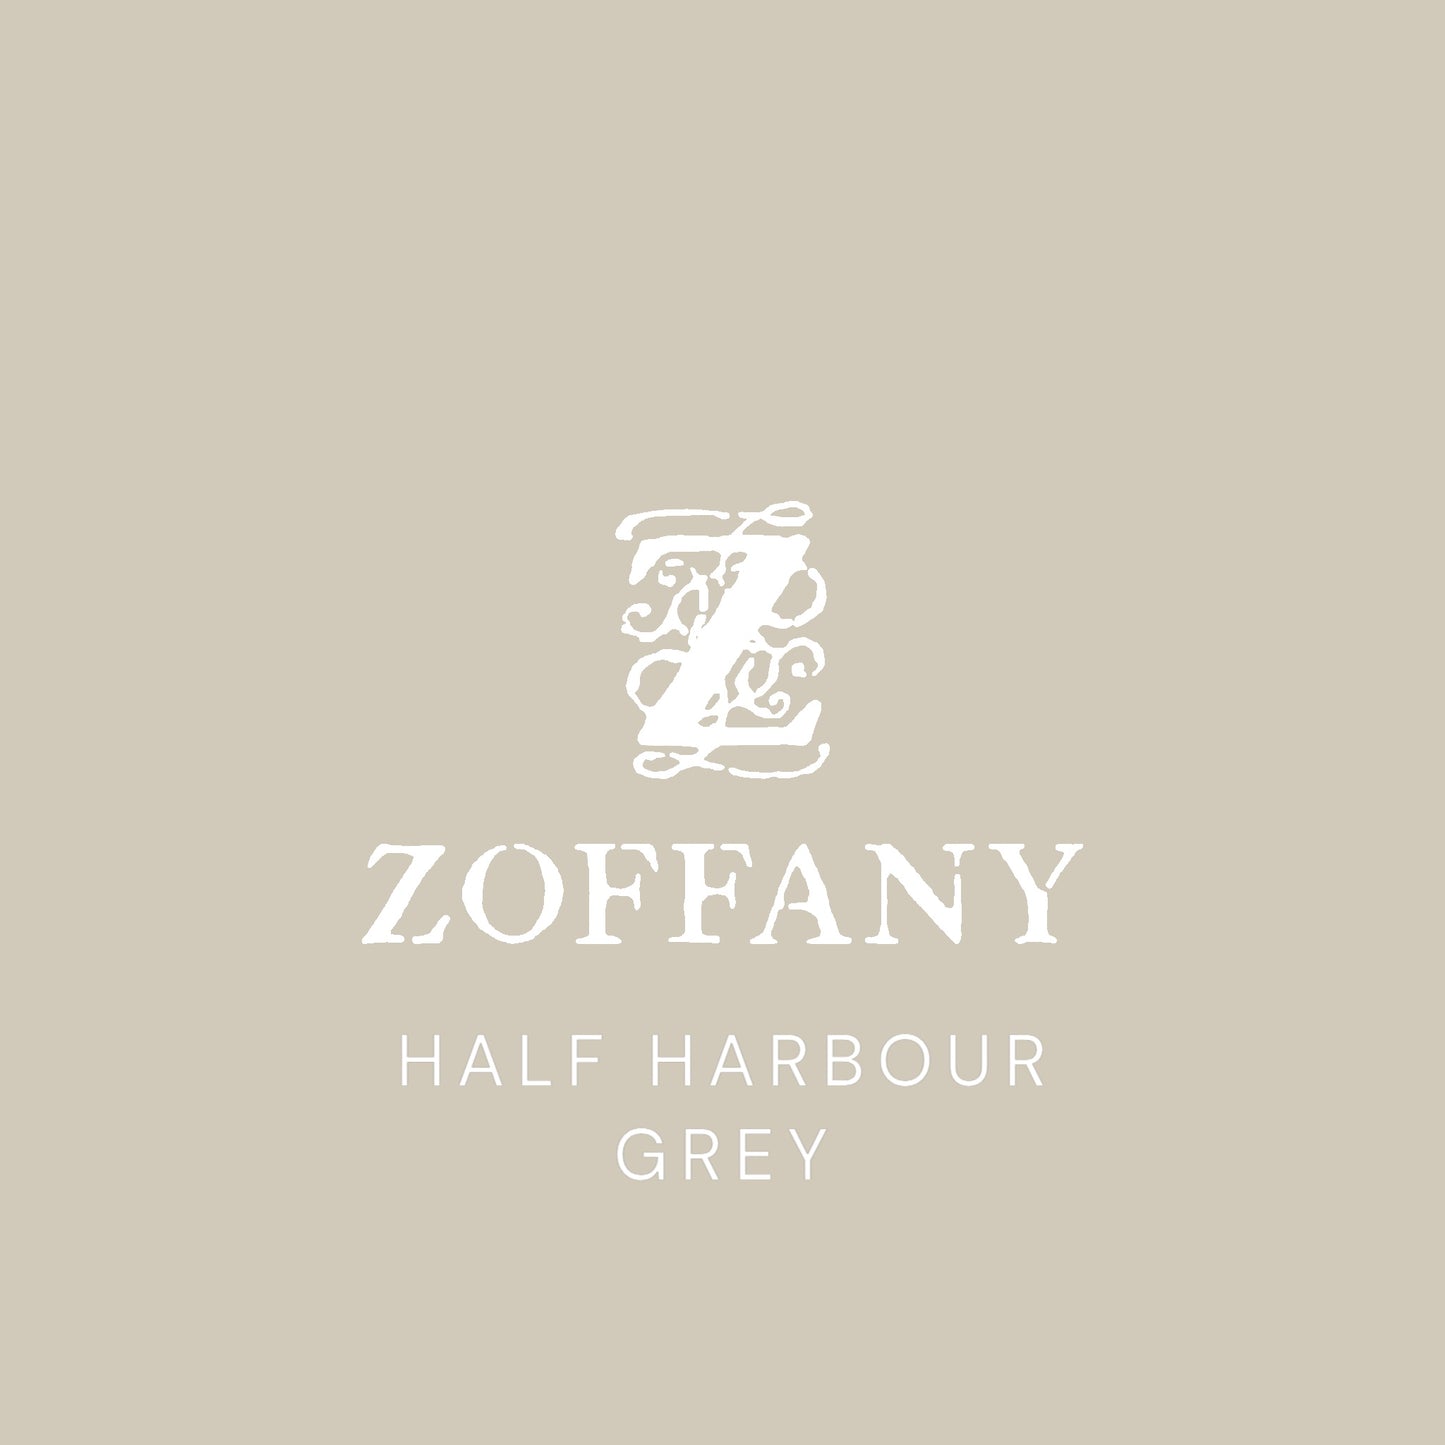 Zoffany's Half Harbour Grey Paint